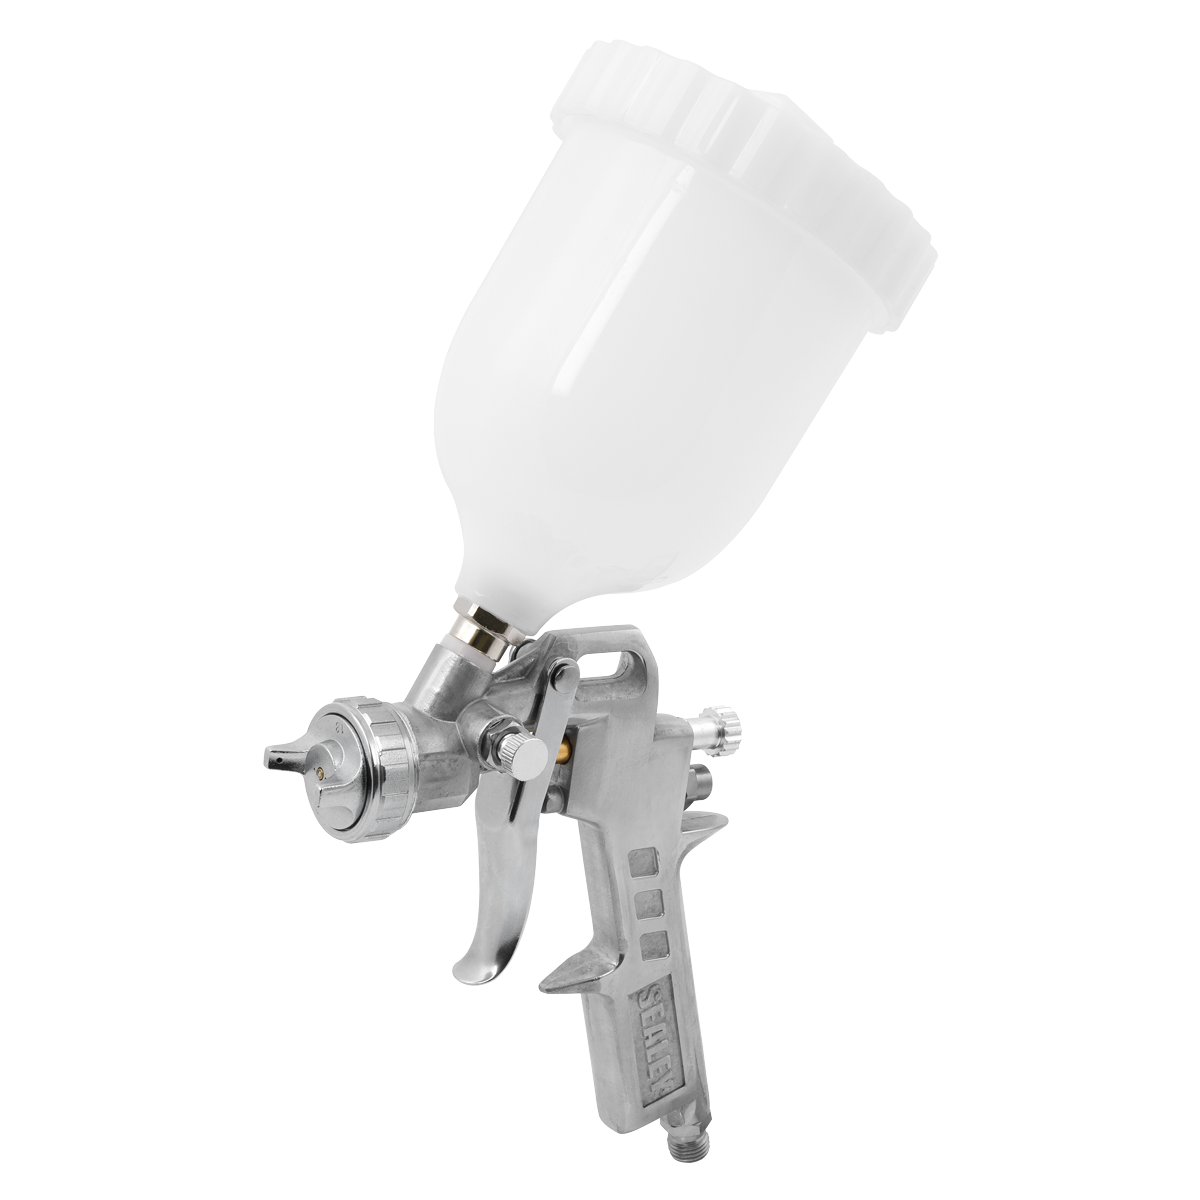 Sealey Gravity Feed Spray Gun - 1.5mm Set-Up SSG503